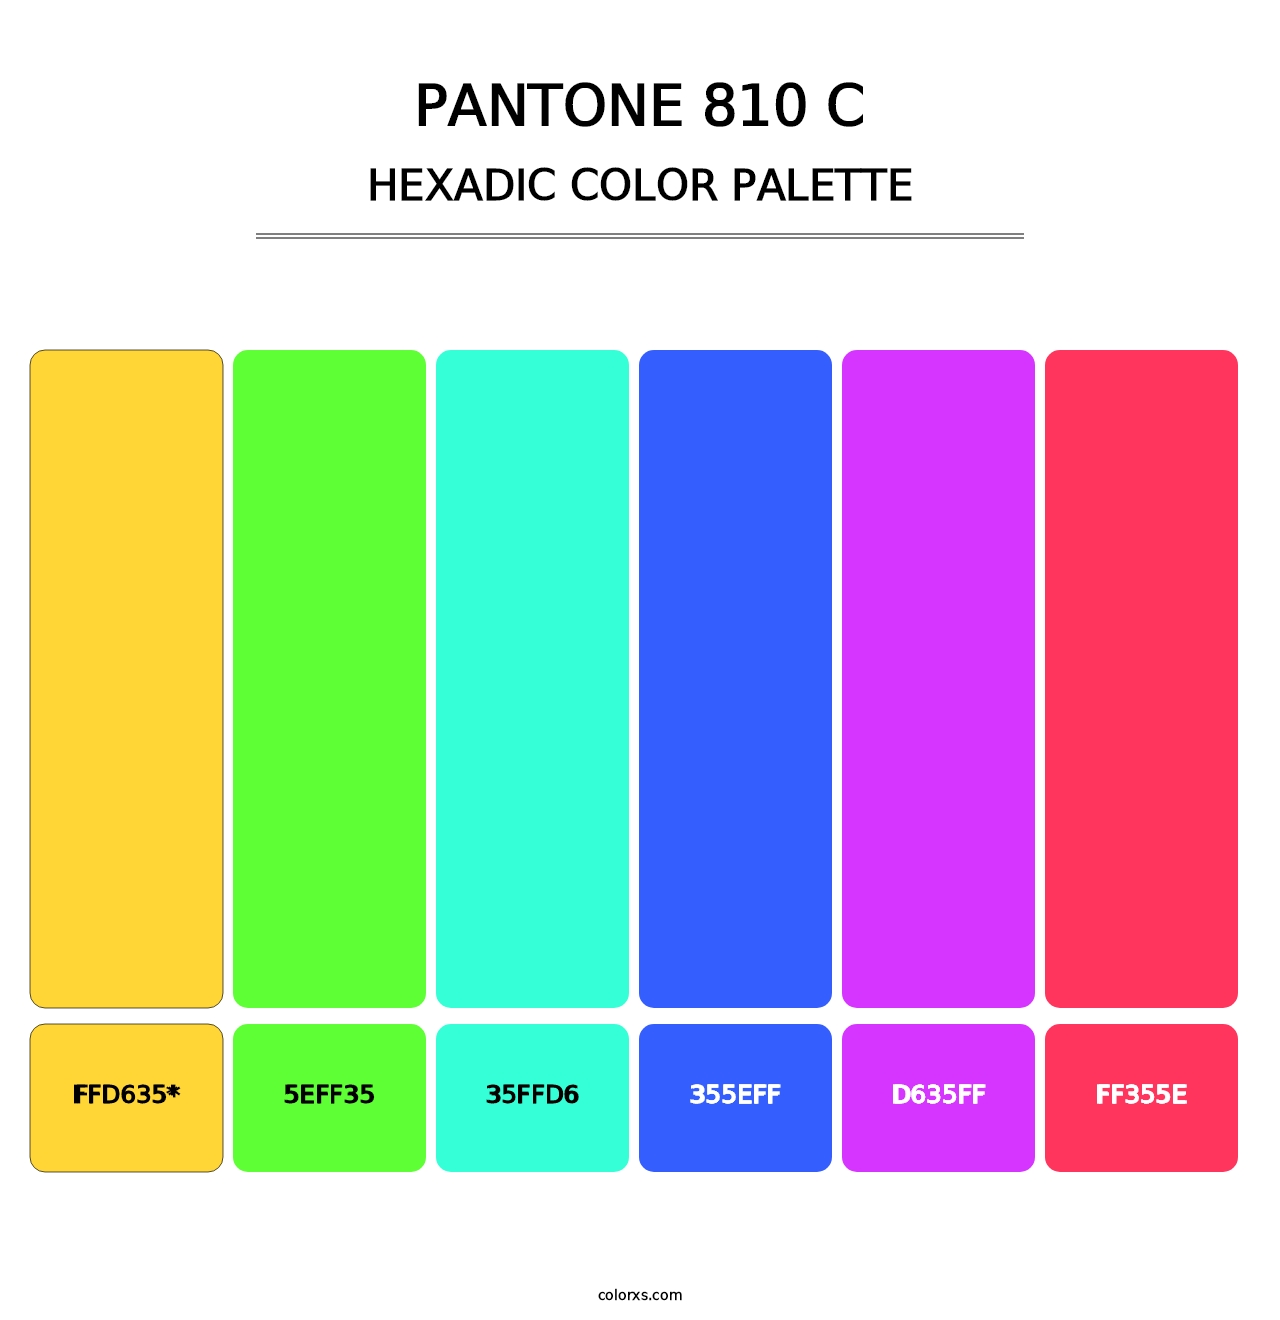 PANTONE 810 C - Hexadic Color Palette